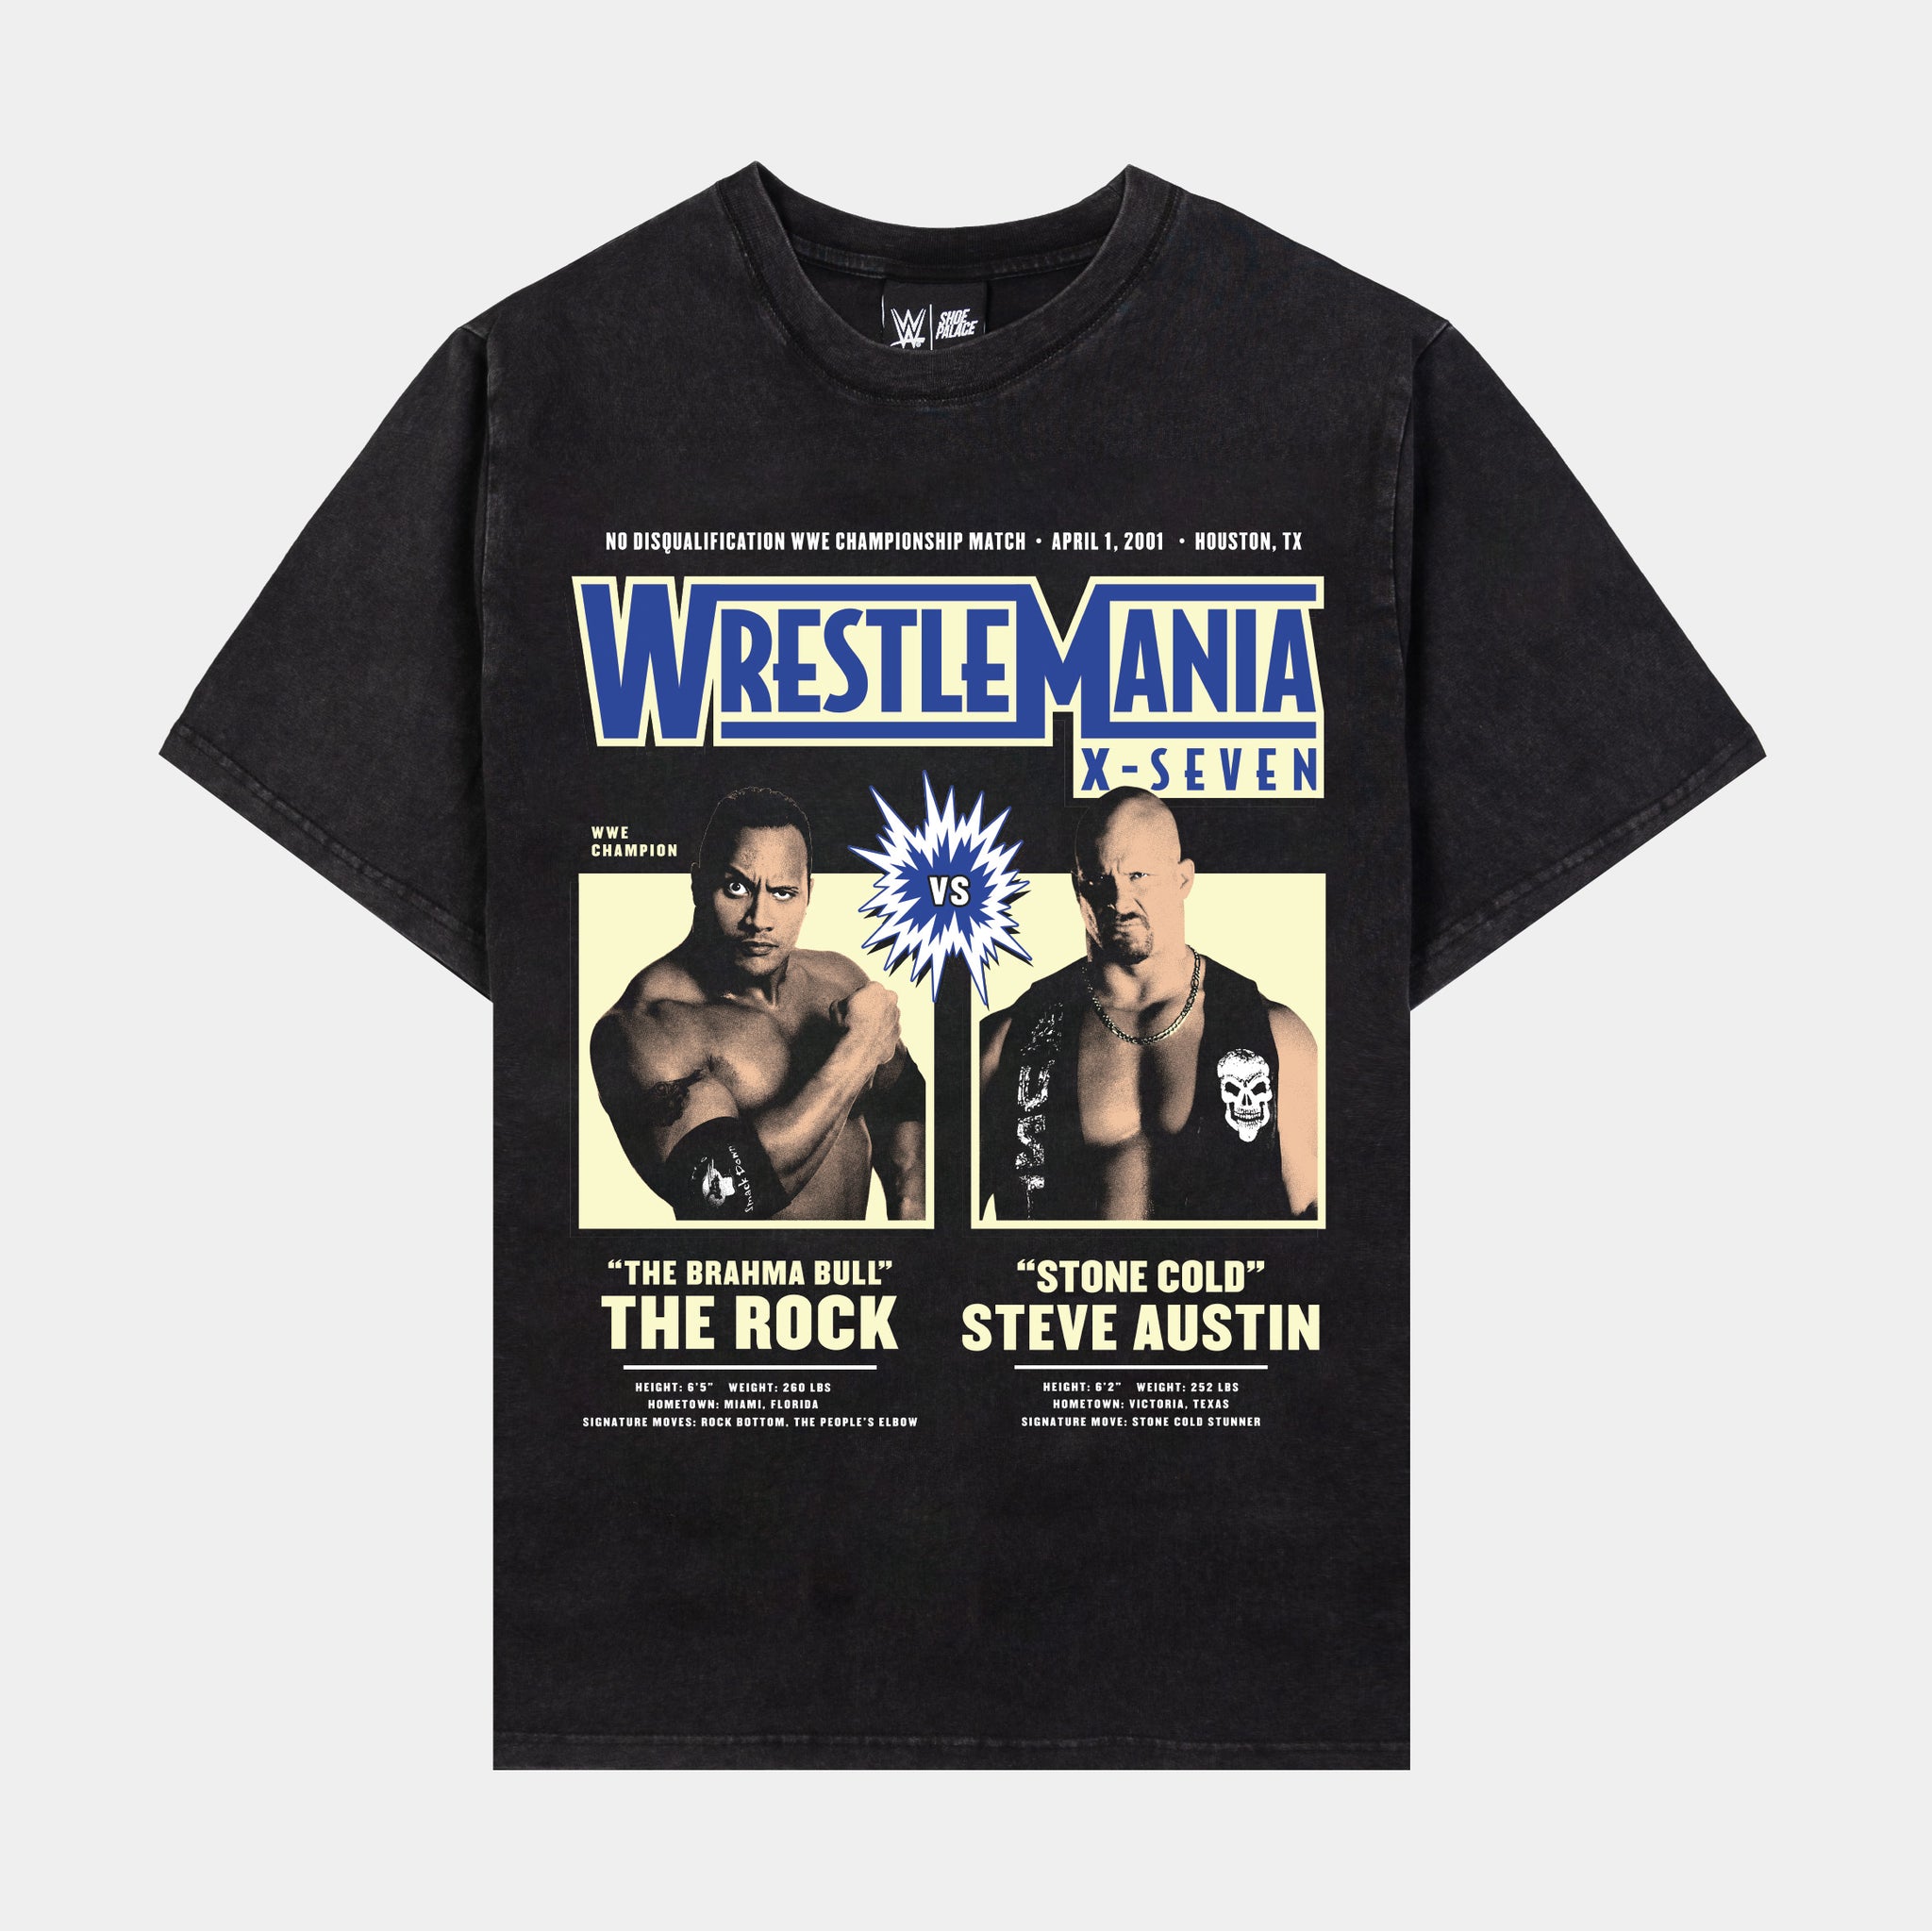 SP x WWE WrestleMania 17 Mens Short Sleeve Shirt (Black/Gold)